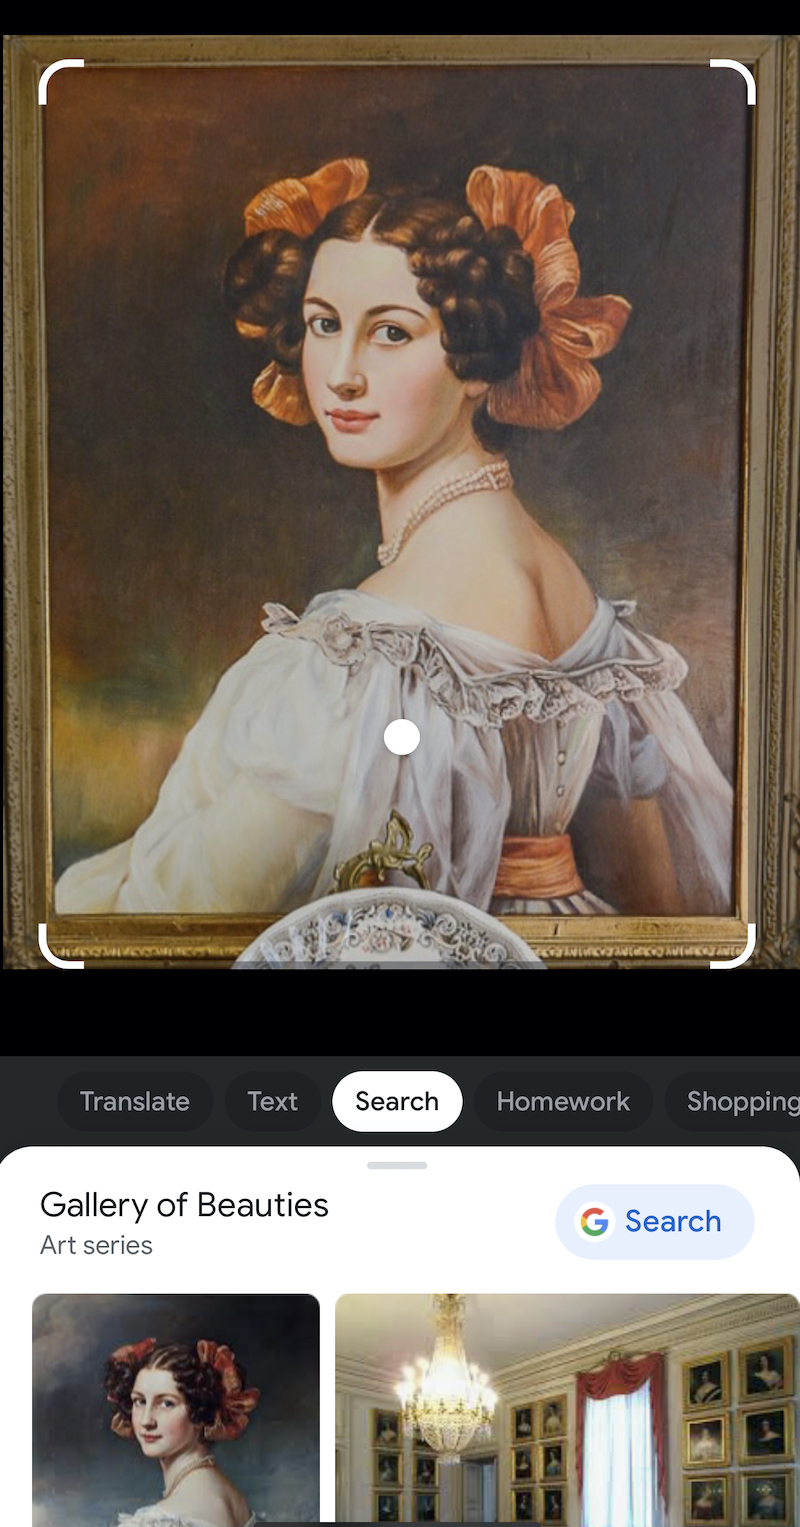 Google image search for portrait